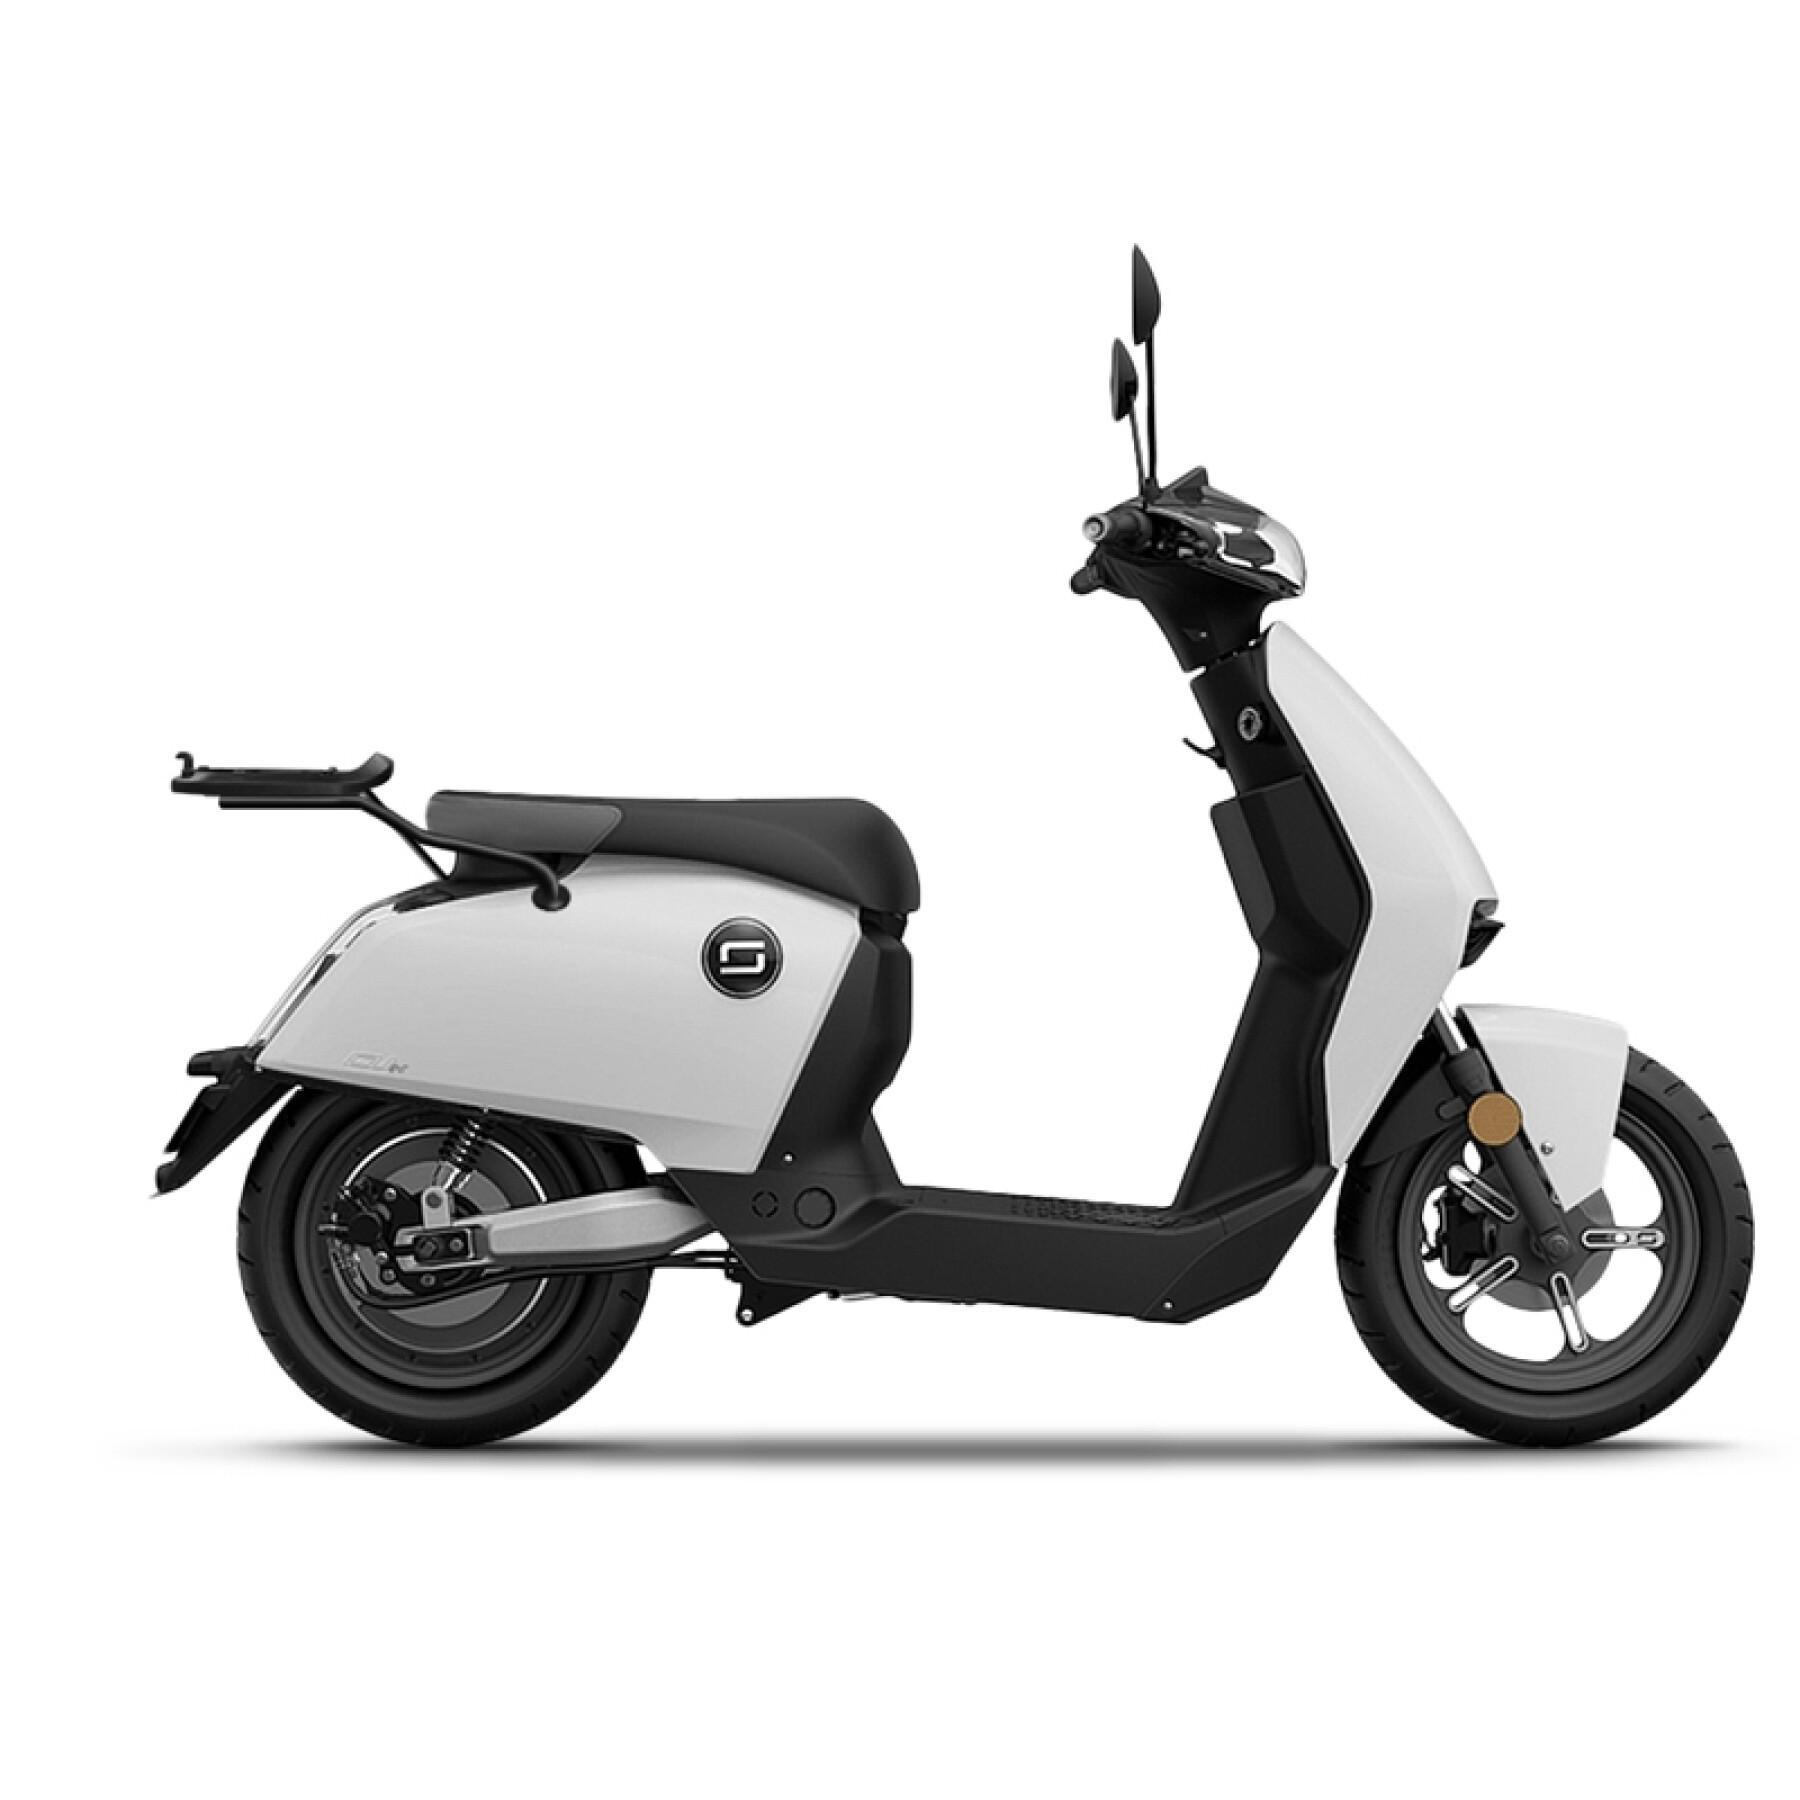 Supporto bauletto scooter Shad Super soco cux 2019-2021 - Support Bauletto moto Shad